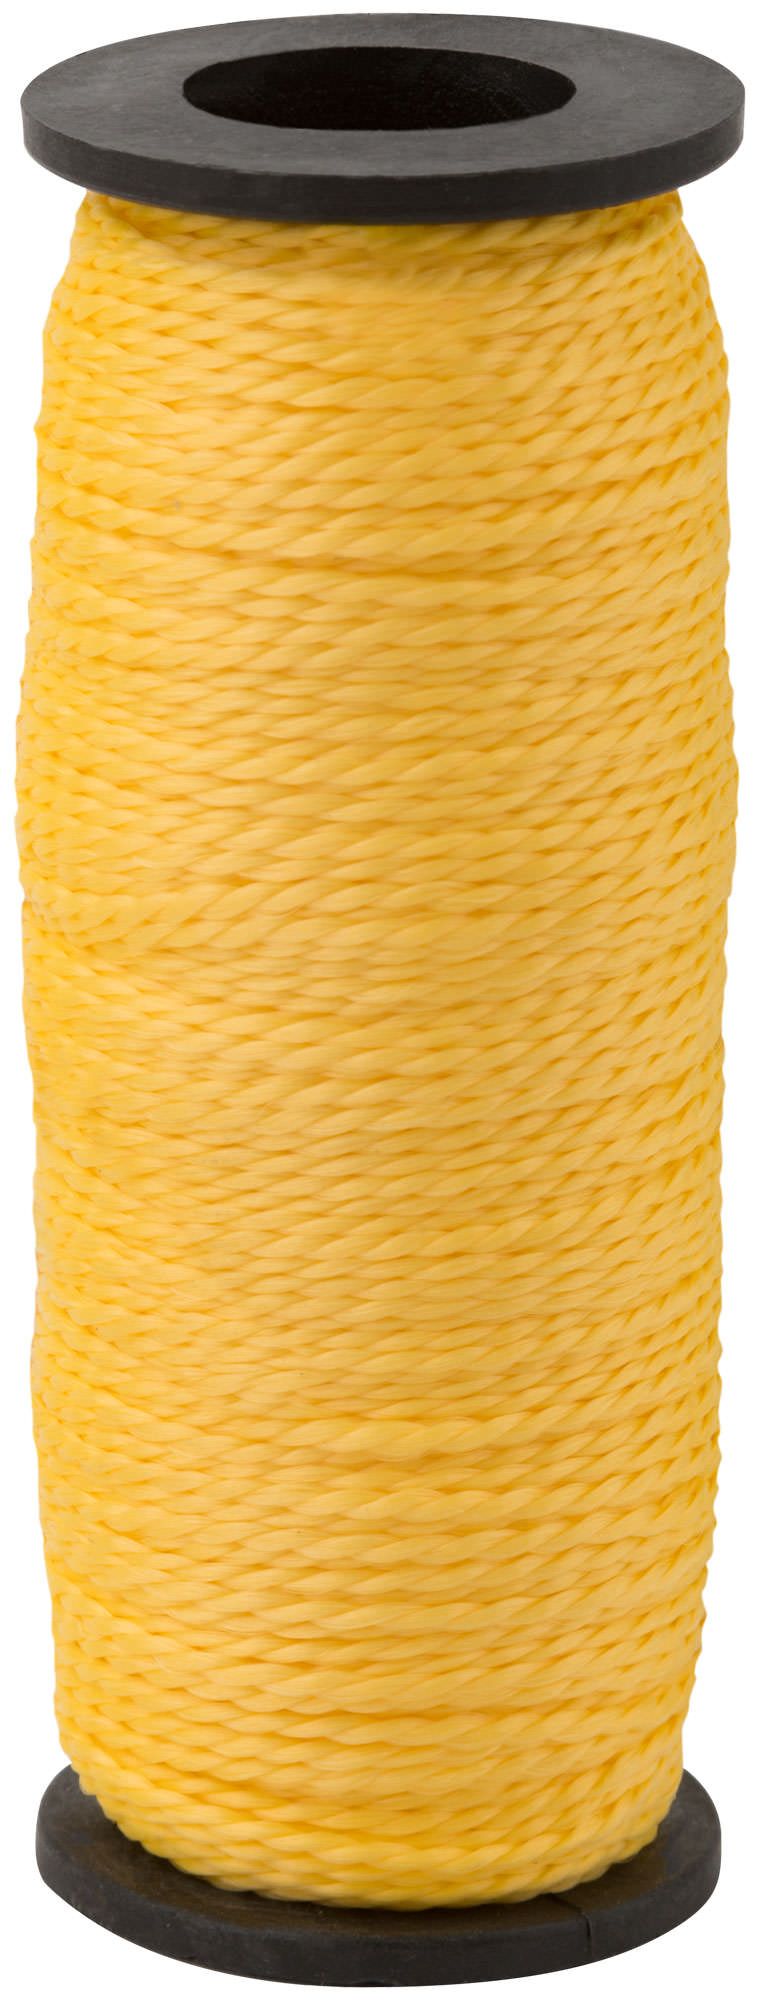 Шнур разметочный капроновый 1,5 мм х 50 м, желтый КУРС 04712